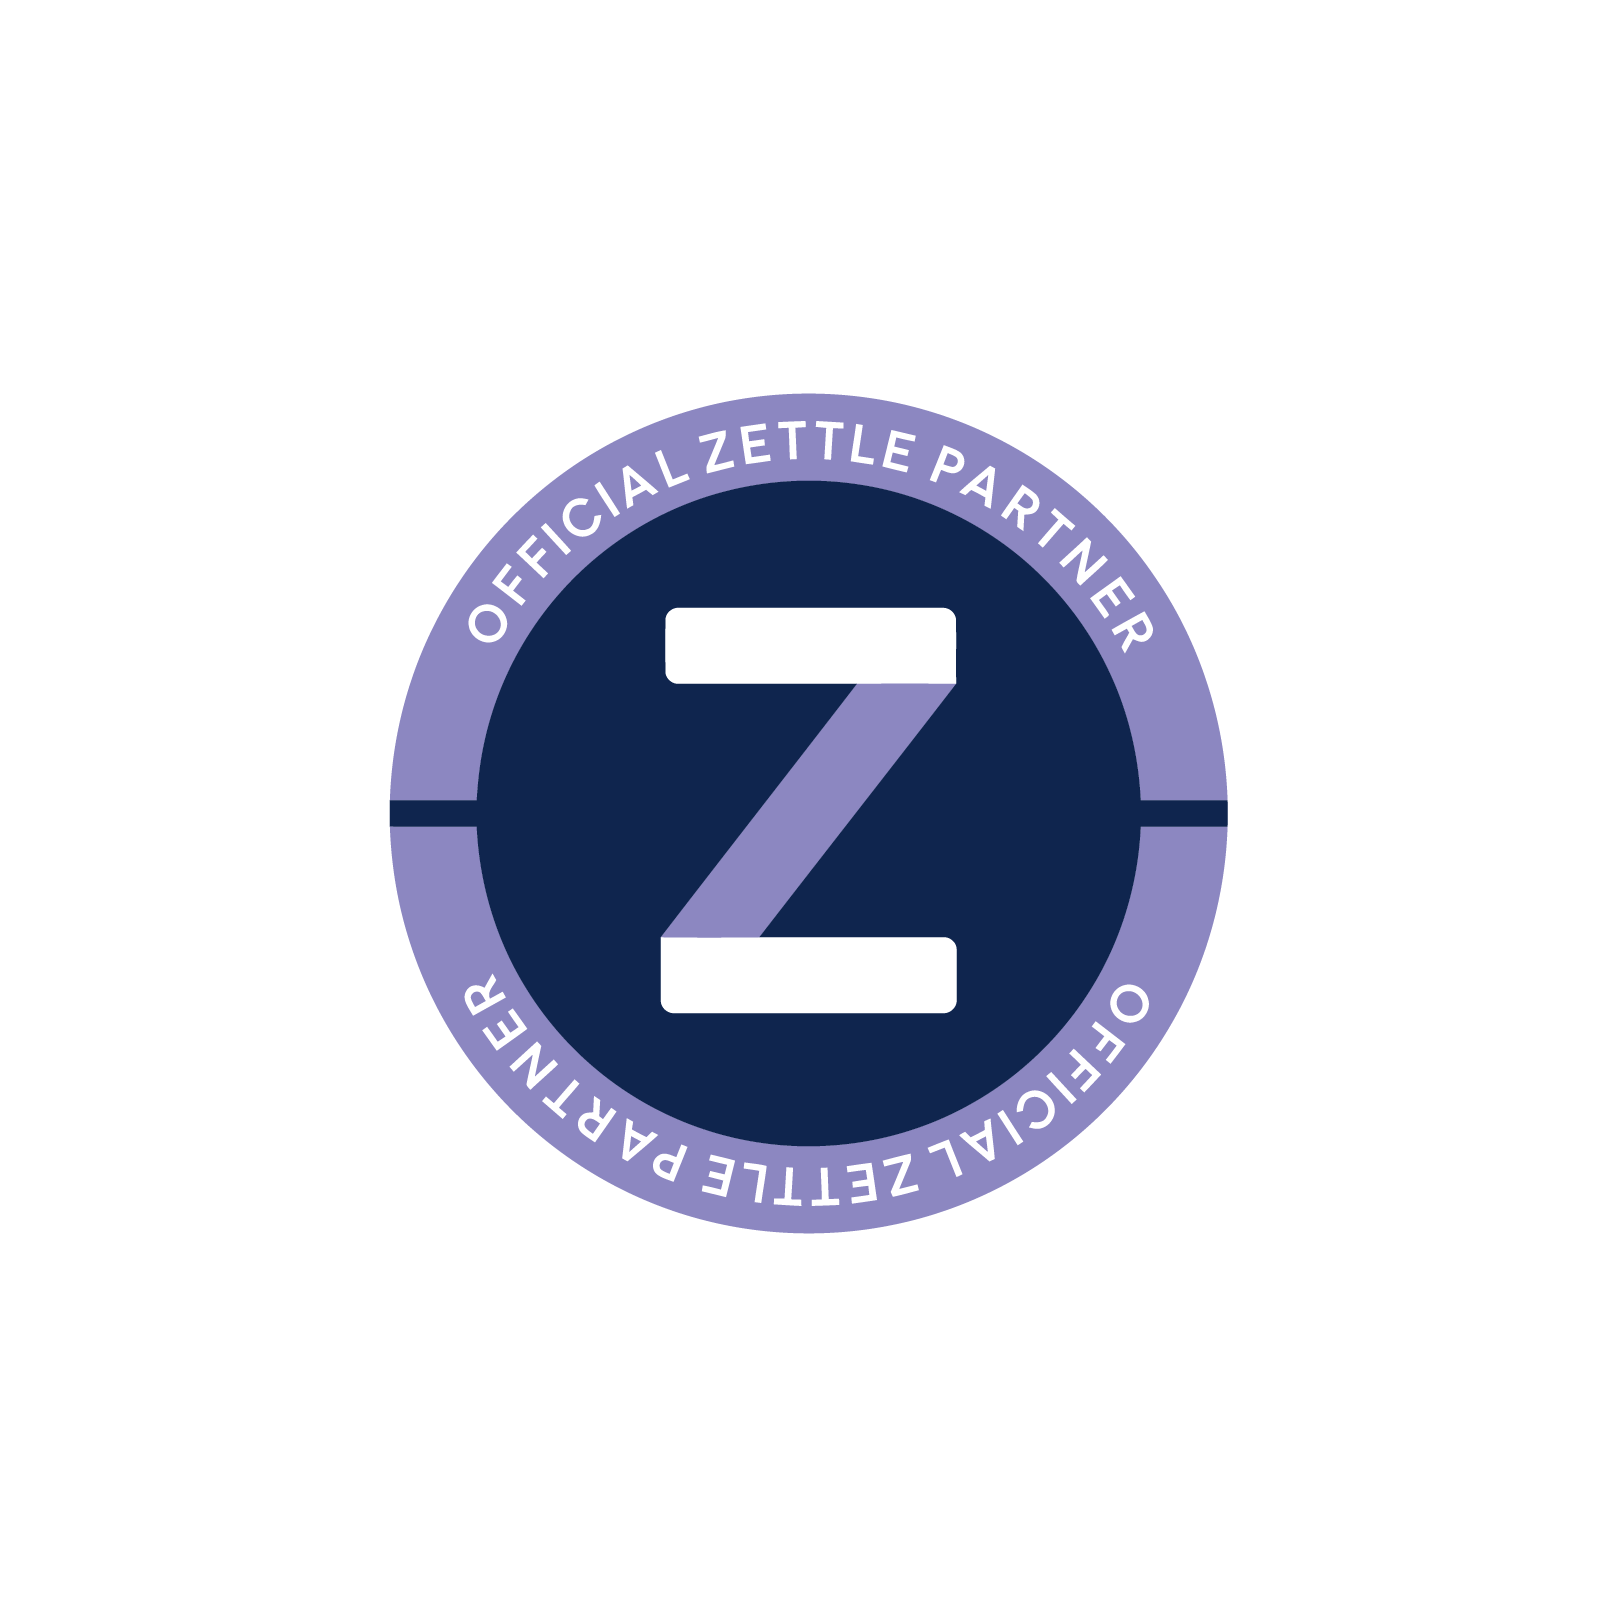 Zettle-logo@4x.png